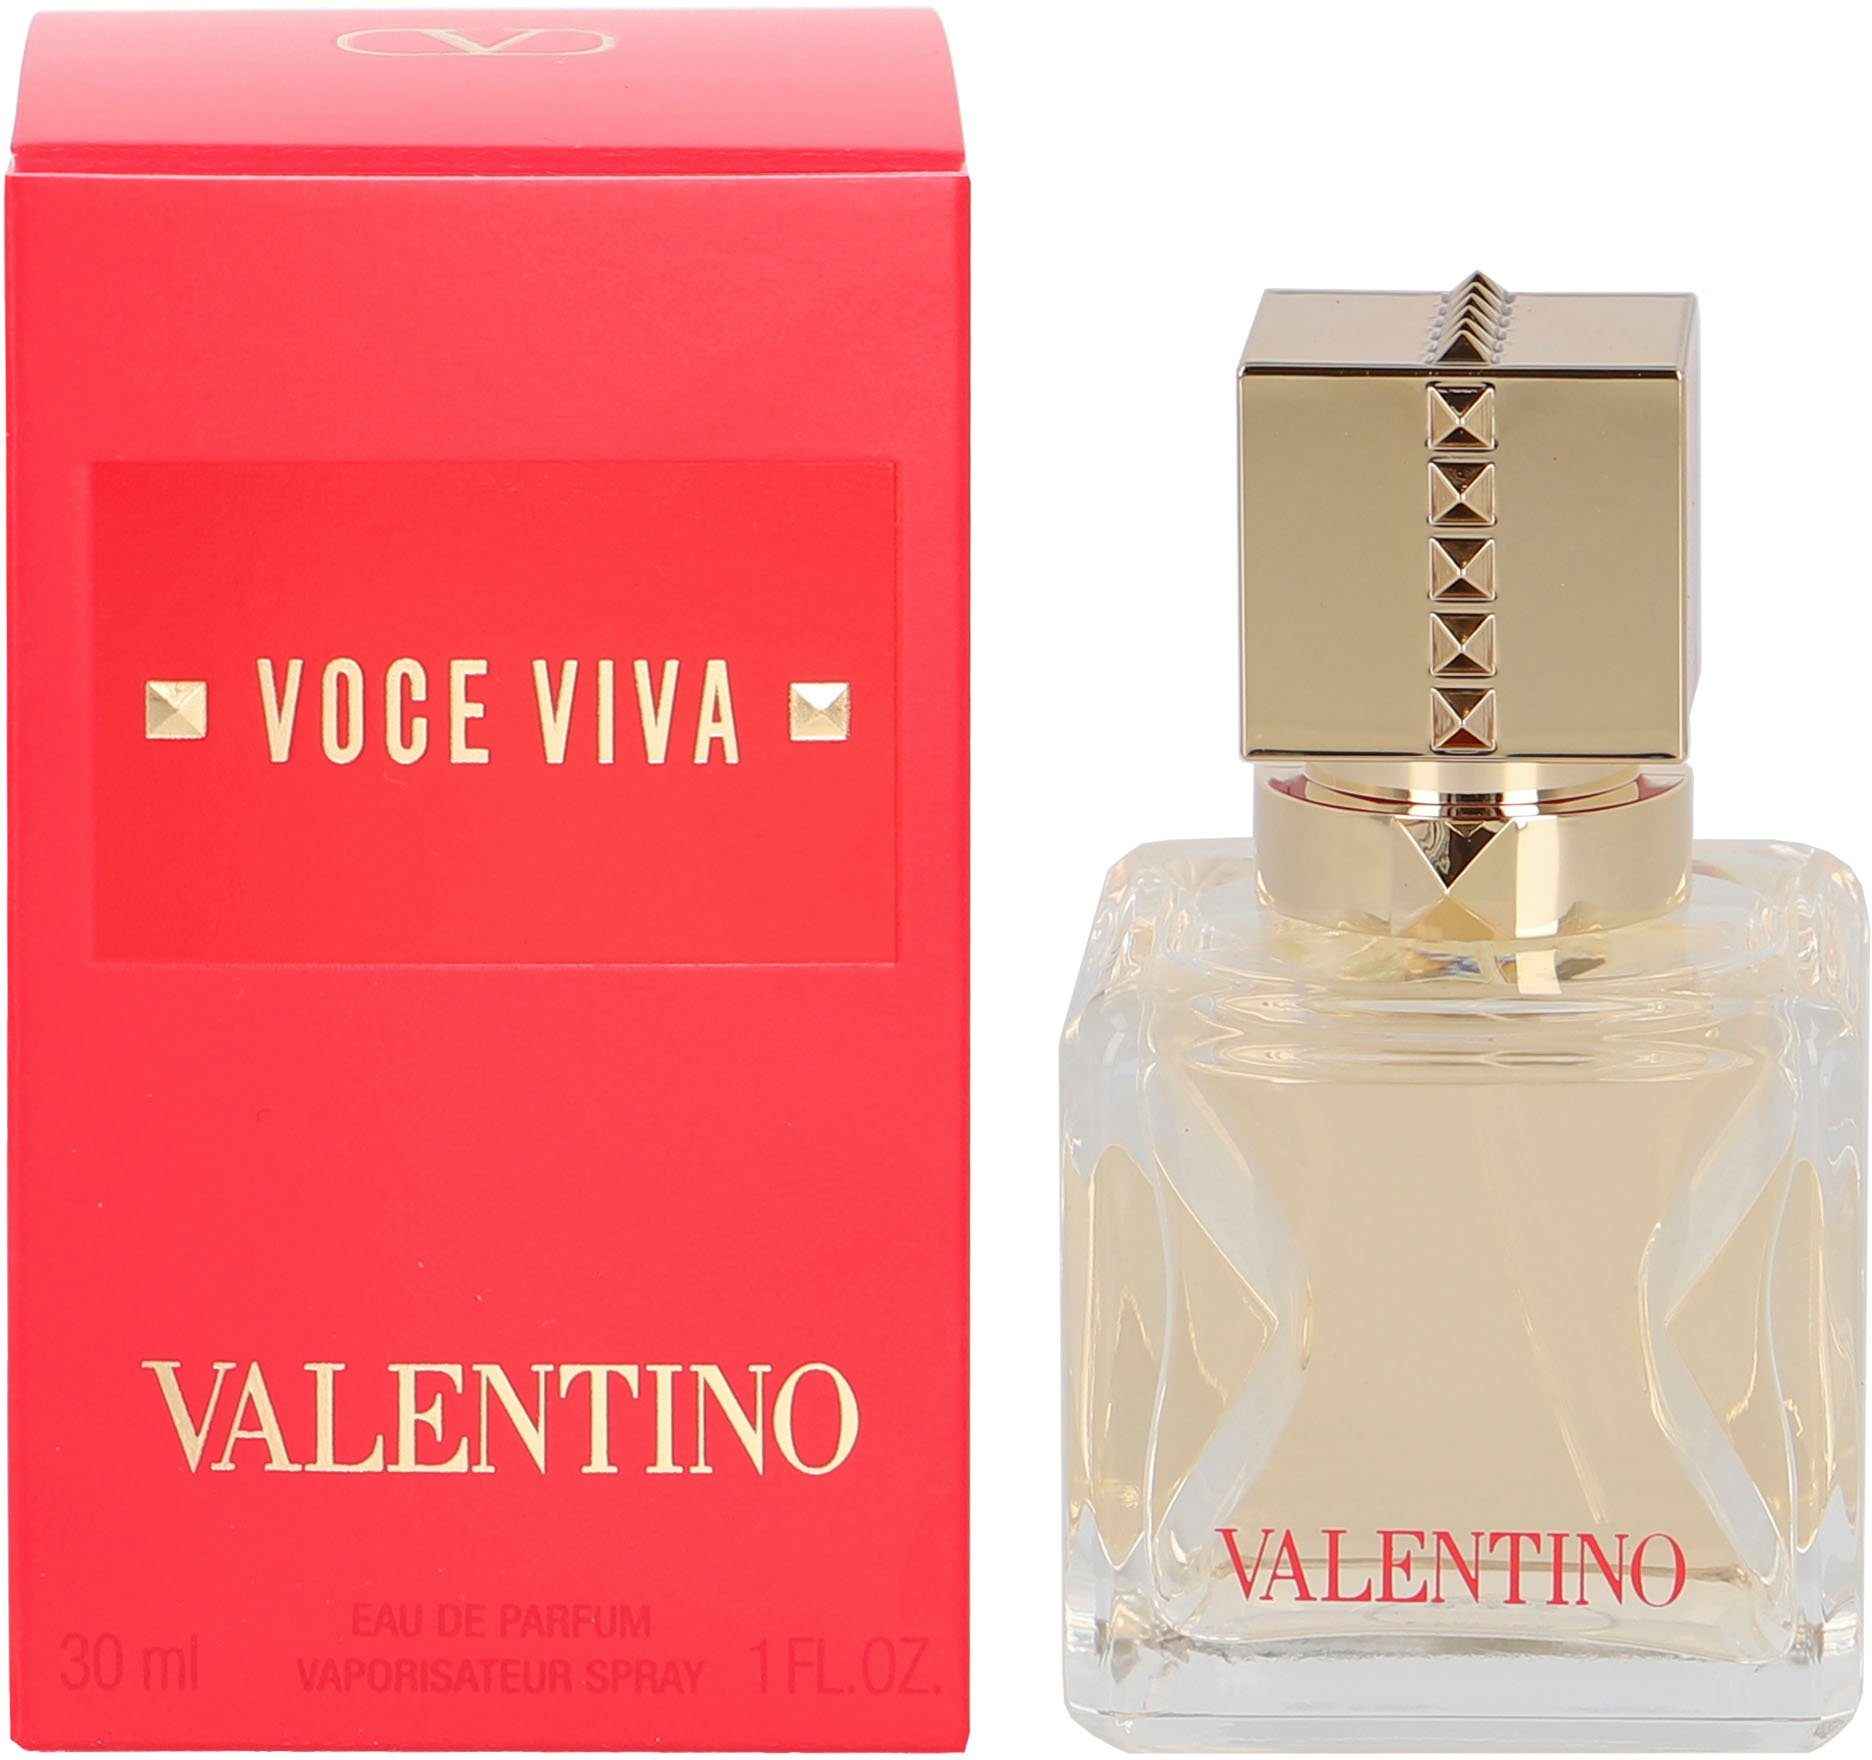 Valentino Eau de Voce Viva Parfum